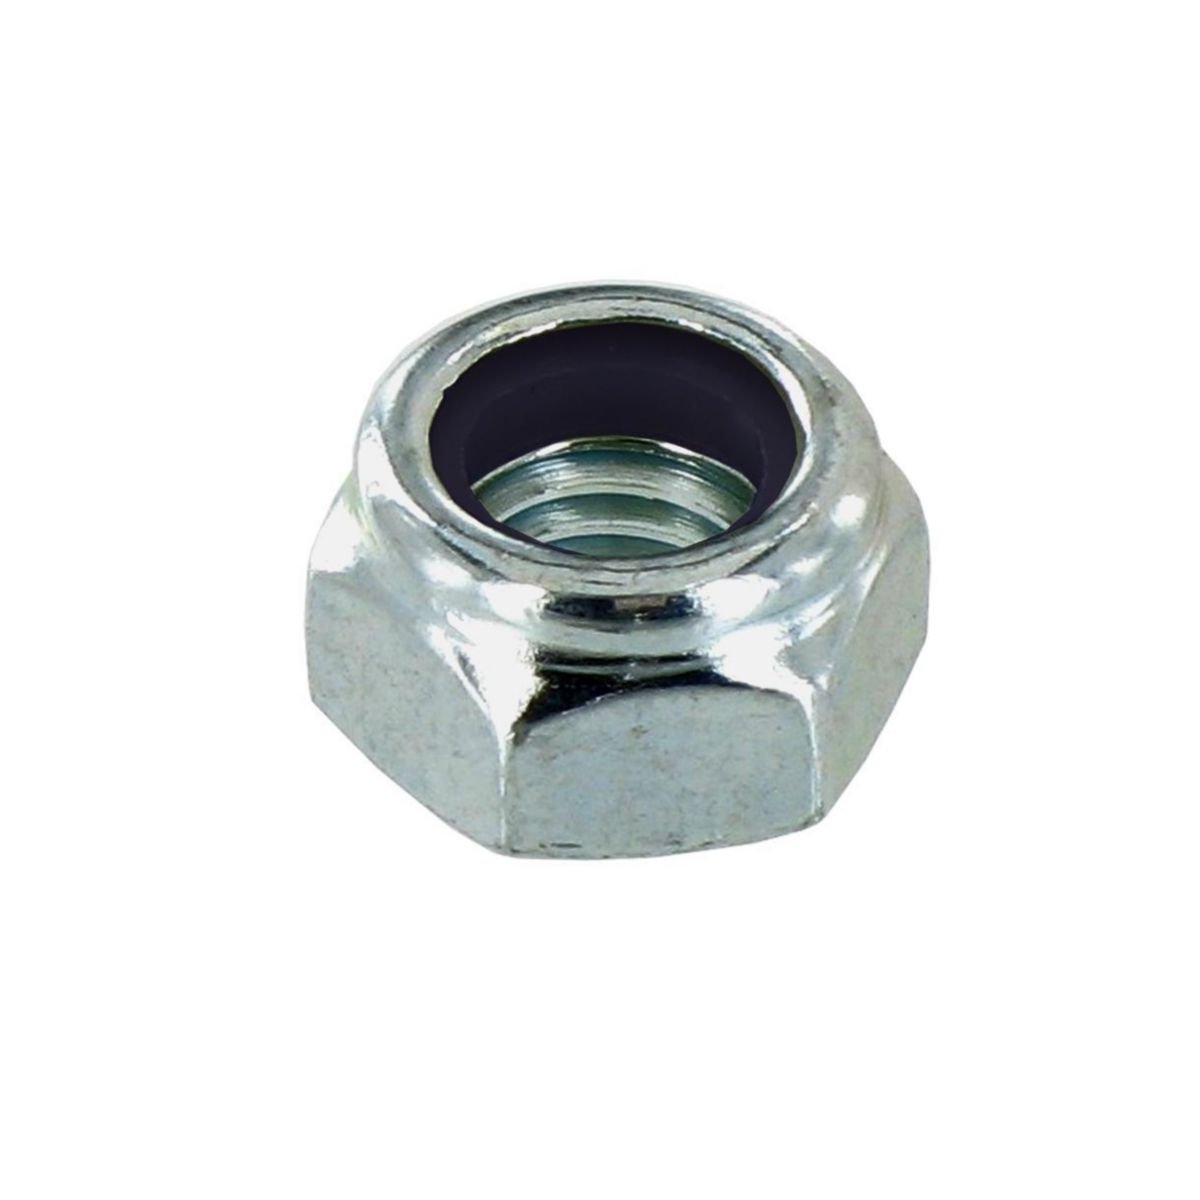 Self-locking nut 6 mm AZI, 20 pieces.